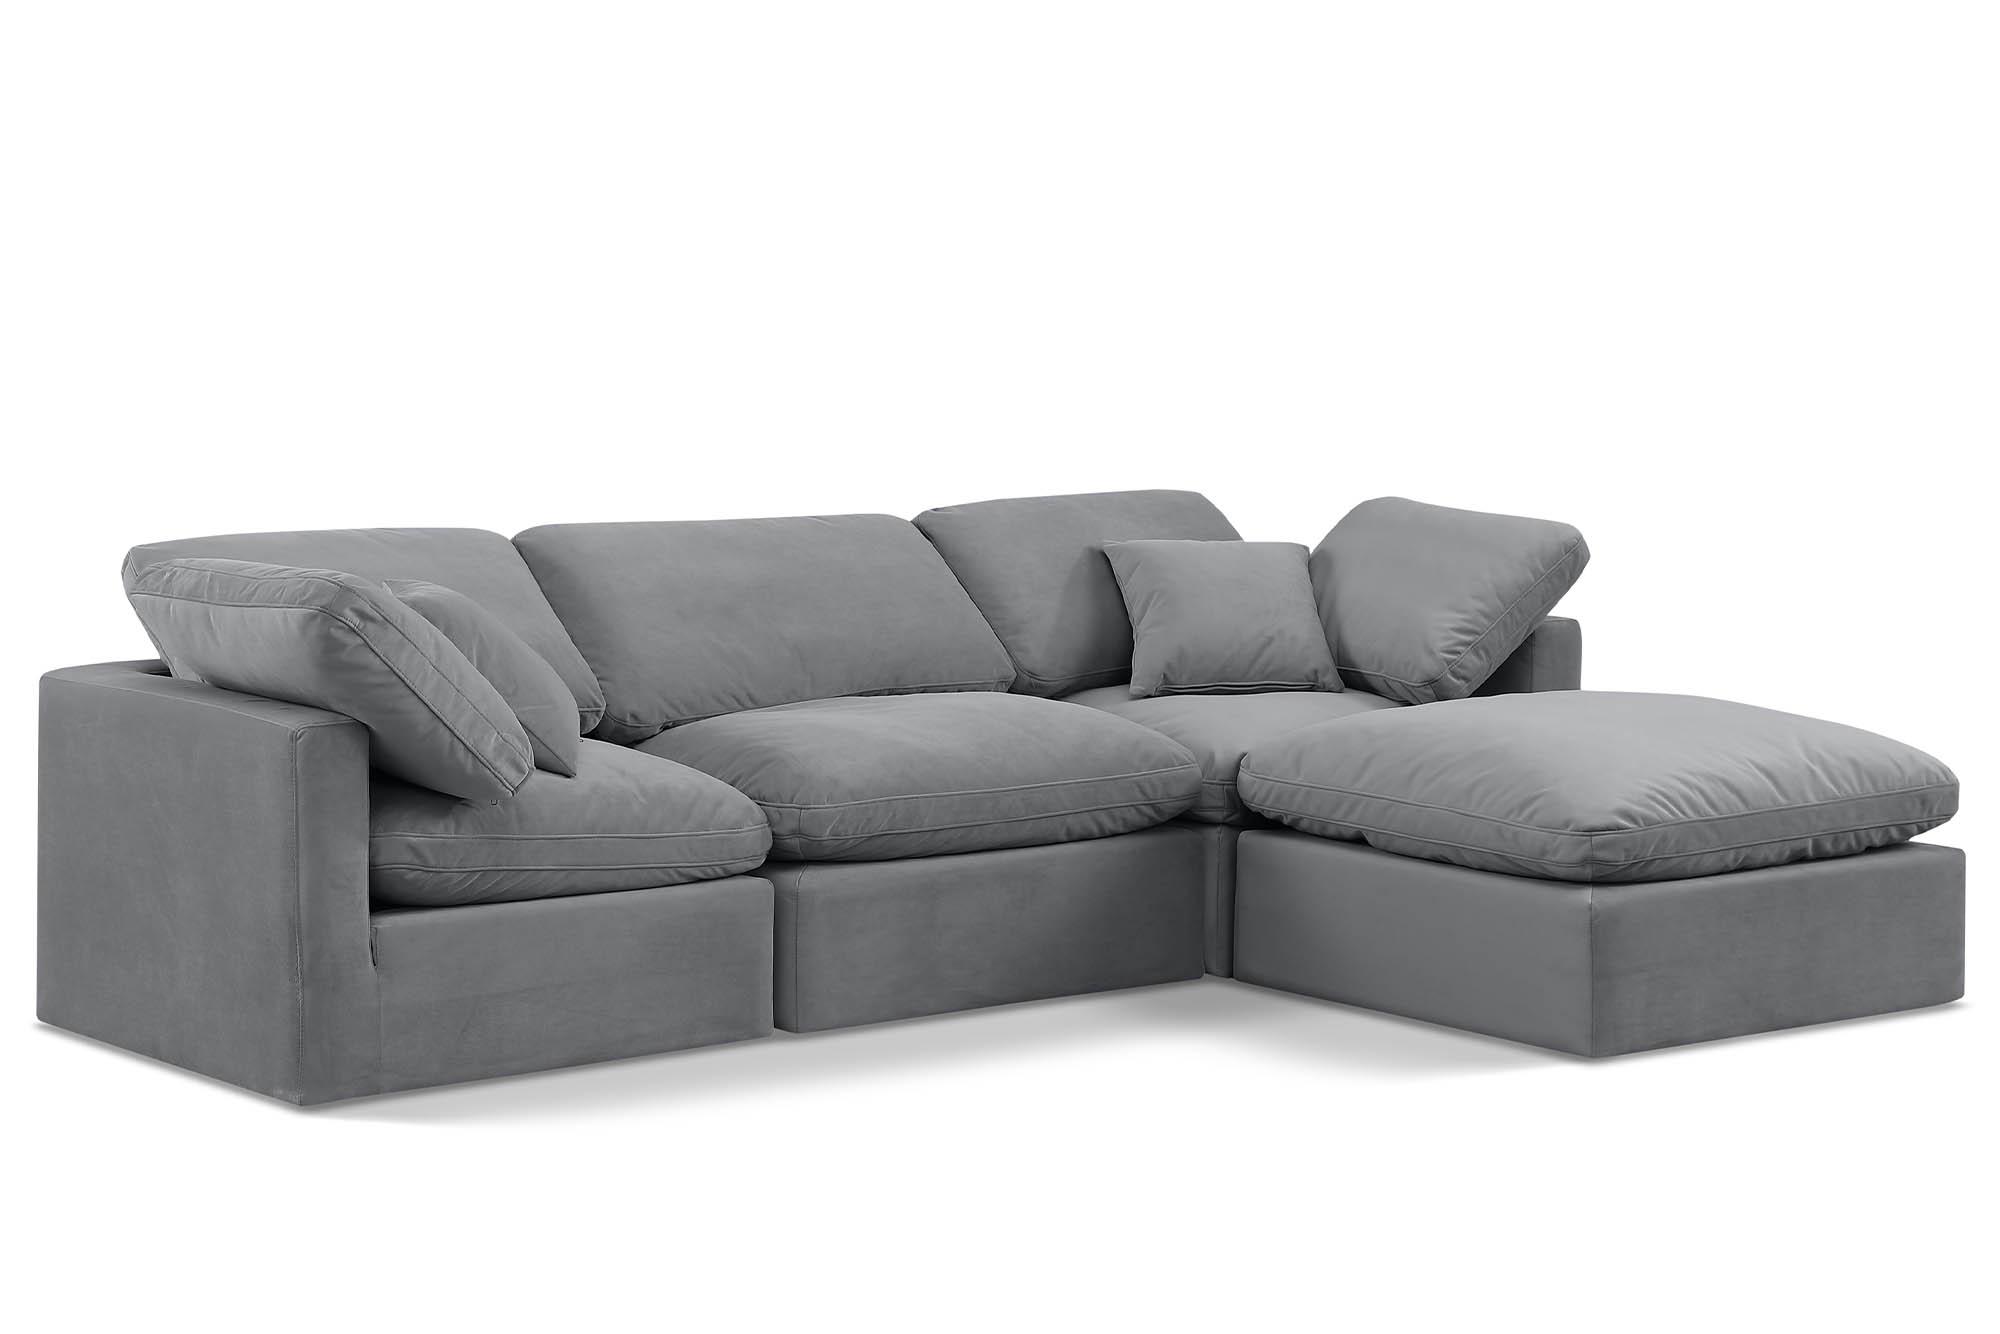 Contemporary, Modern Modular Sectional Sofa INDULGE 147Grey-Sec4A 147Grey-Sec4A in Gray Velvet